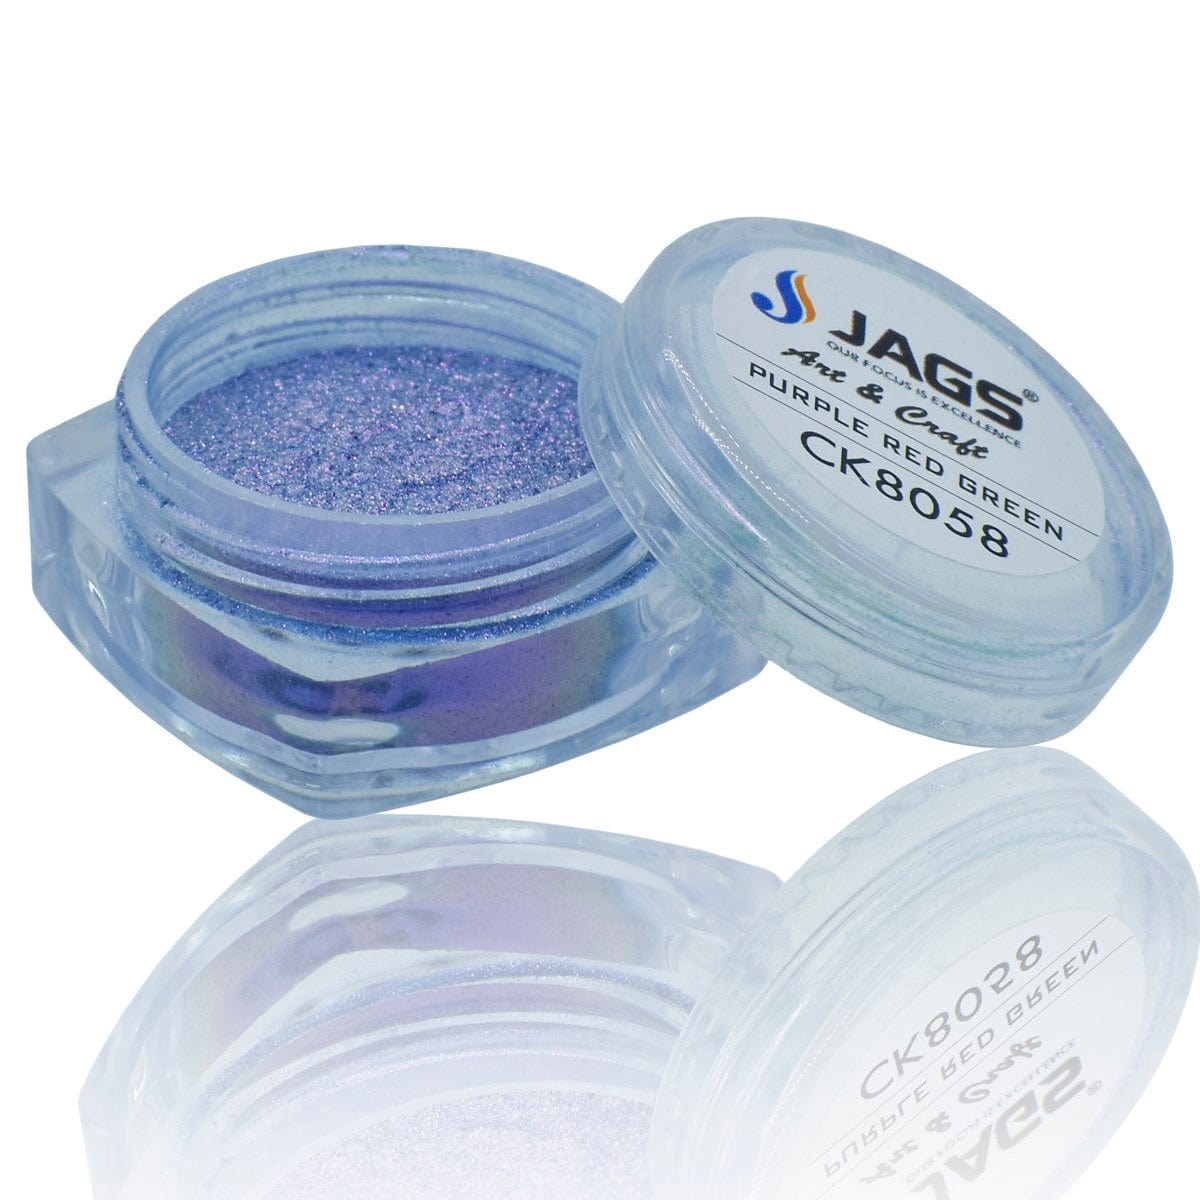 jags-mumbai Resin Pigment Enhance Your Art with Stunning Resin Chameleon Powder